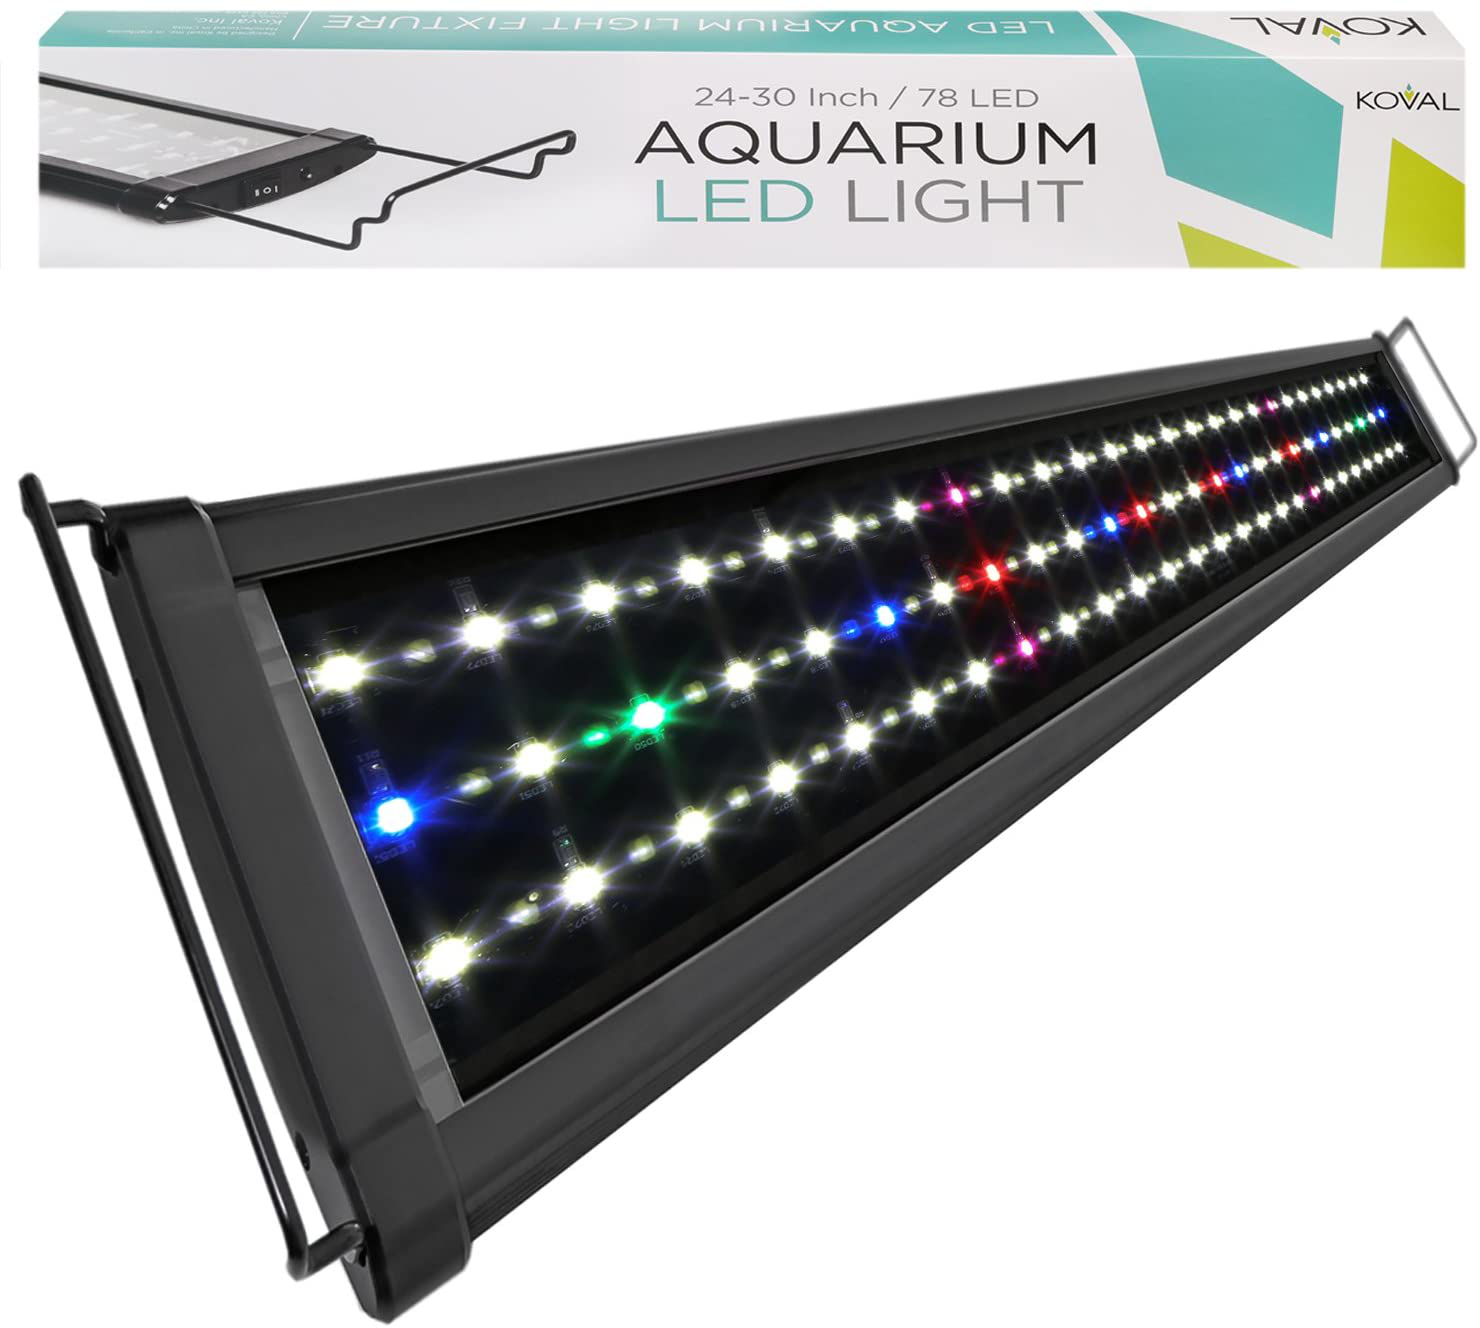 Koval Aquarium Lighting Fish Tank Light Hood with Extendable Brackets, White and Blue Leds